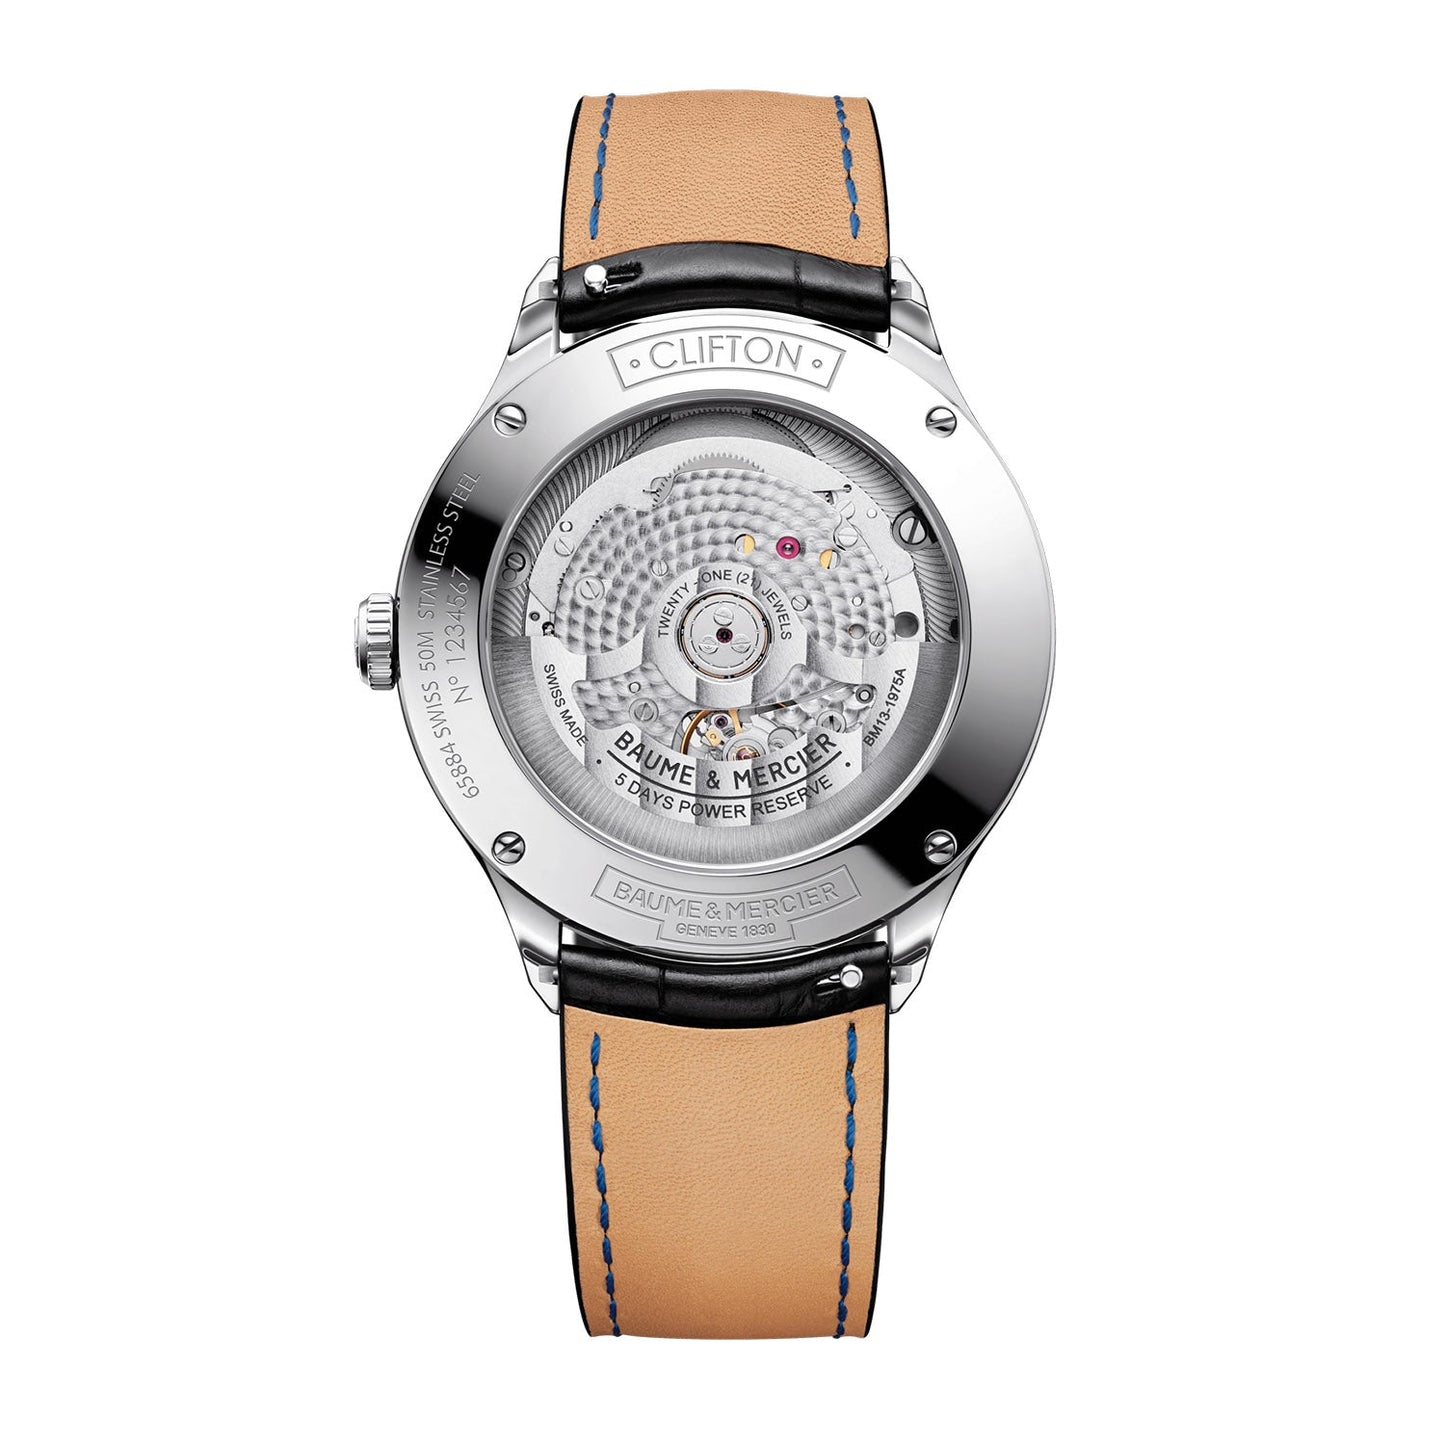 Baume & Mercier Clifton Automatic, Date, Cosc Certified Men's Watch 40mm